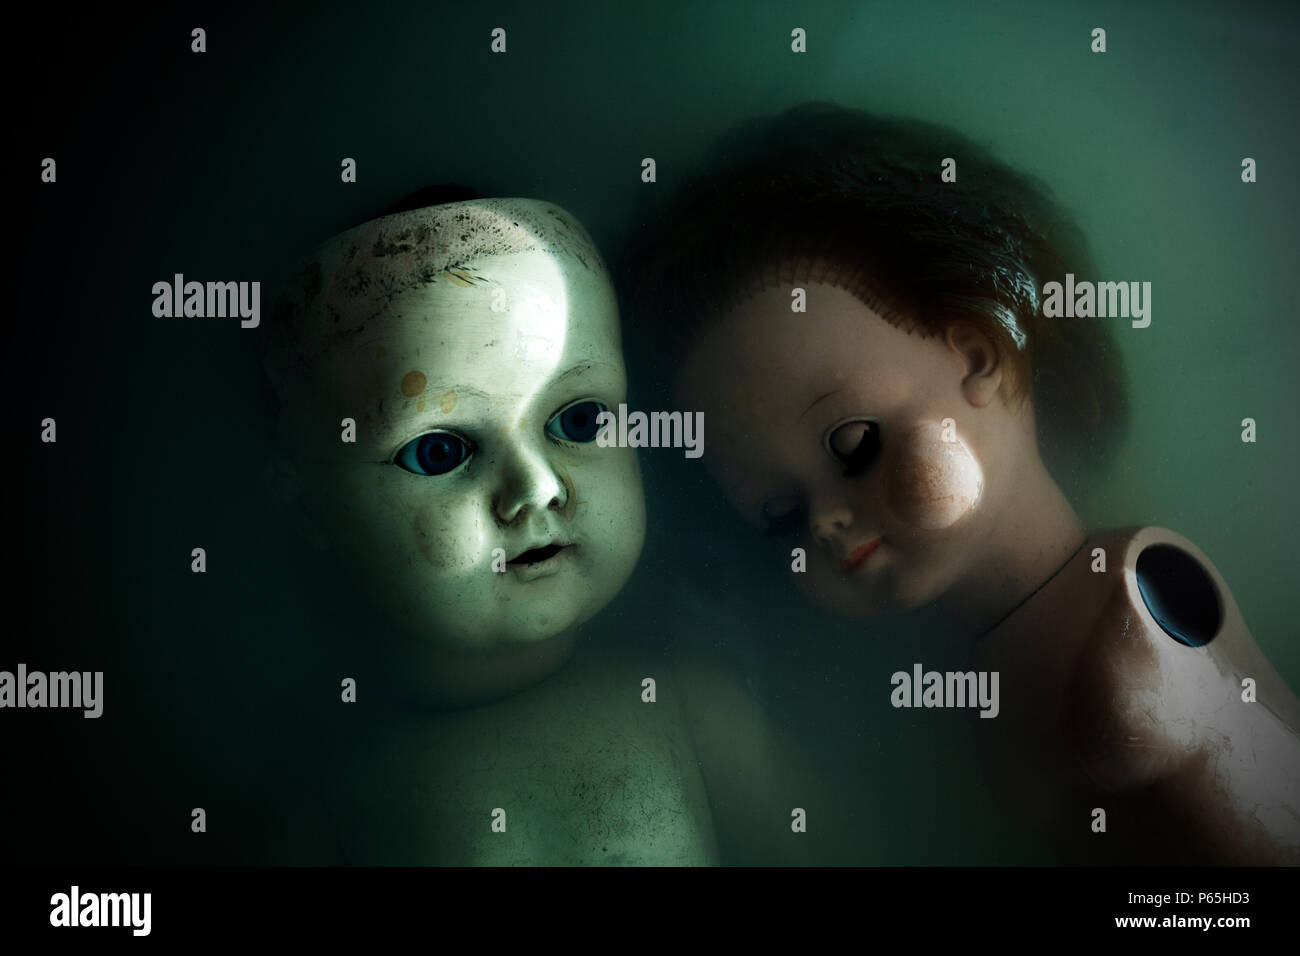 Creepy dolls in dark dirty water Stock Photo